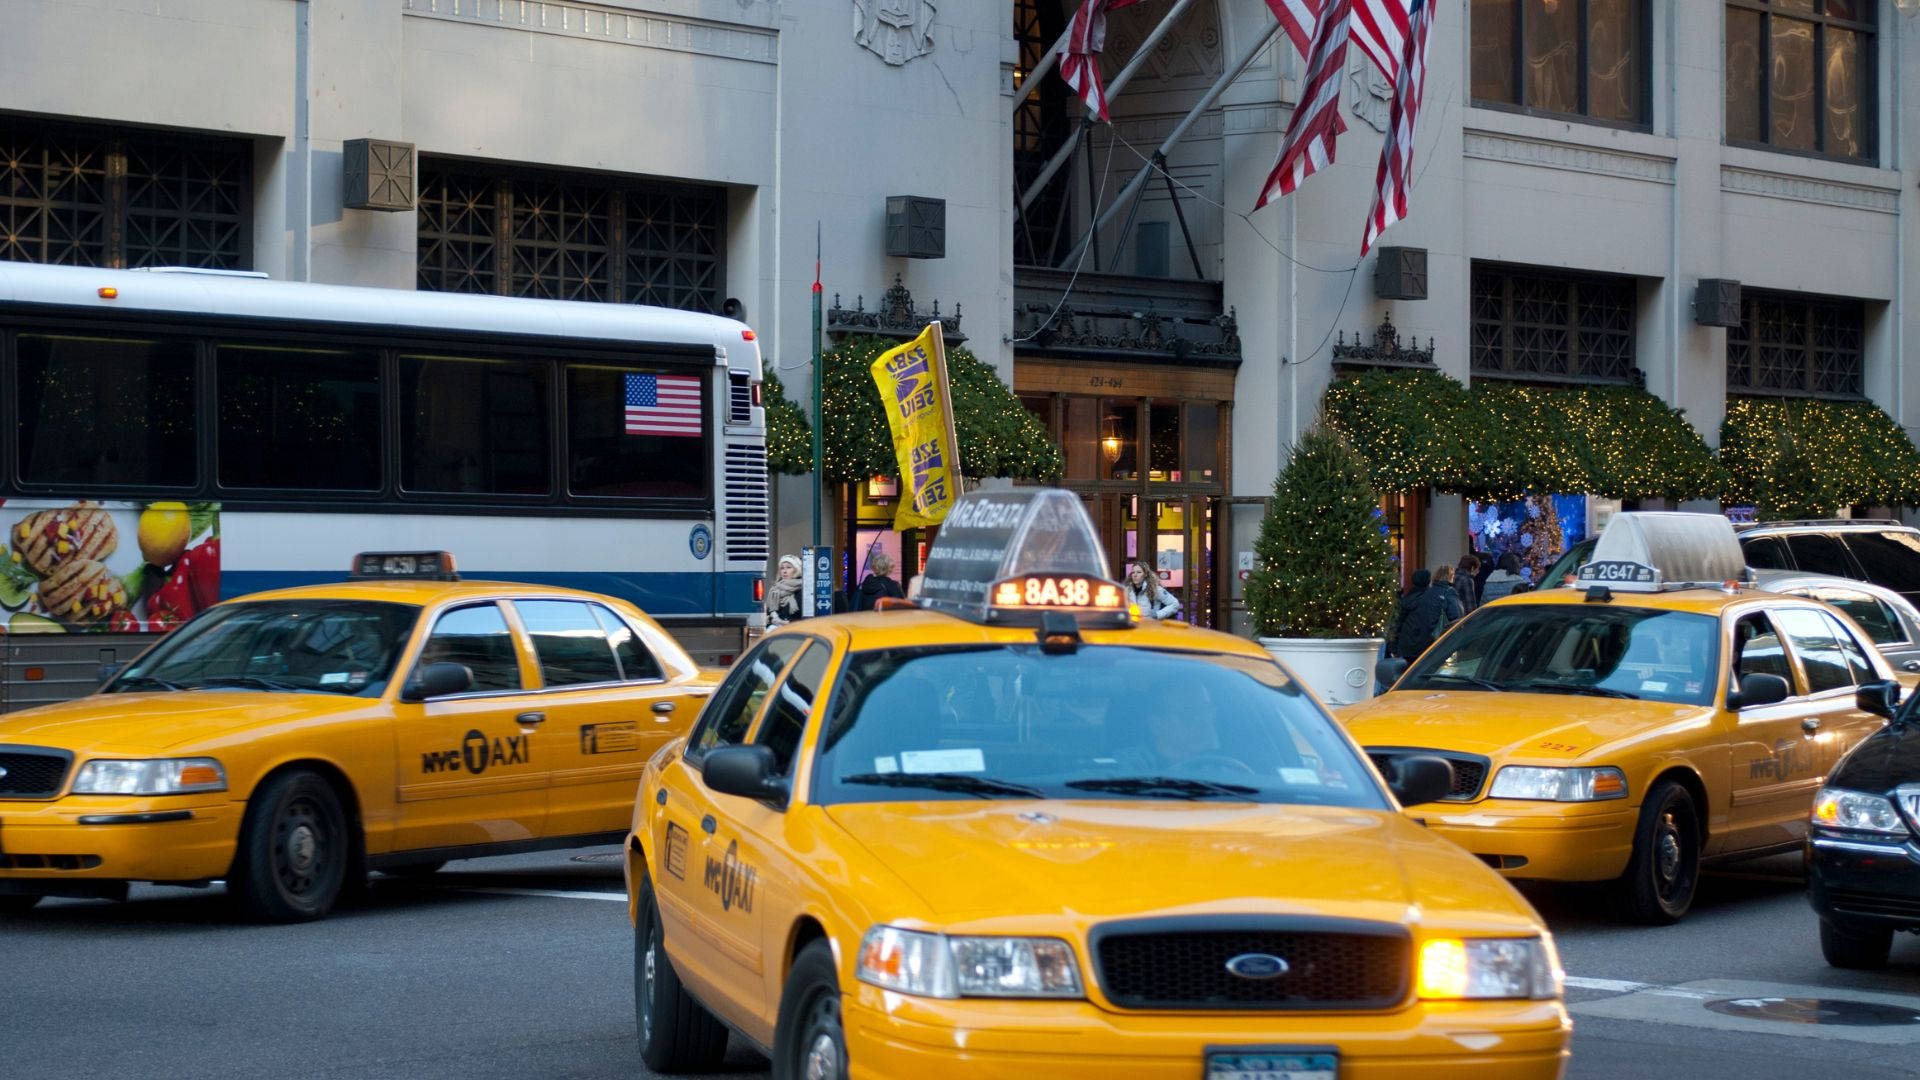 Gelbestaxi Von Yellow Cab Bei Lord & Taylor In New York City Wallpaper